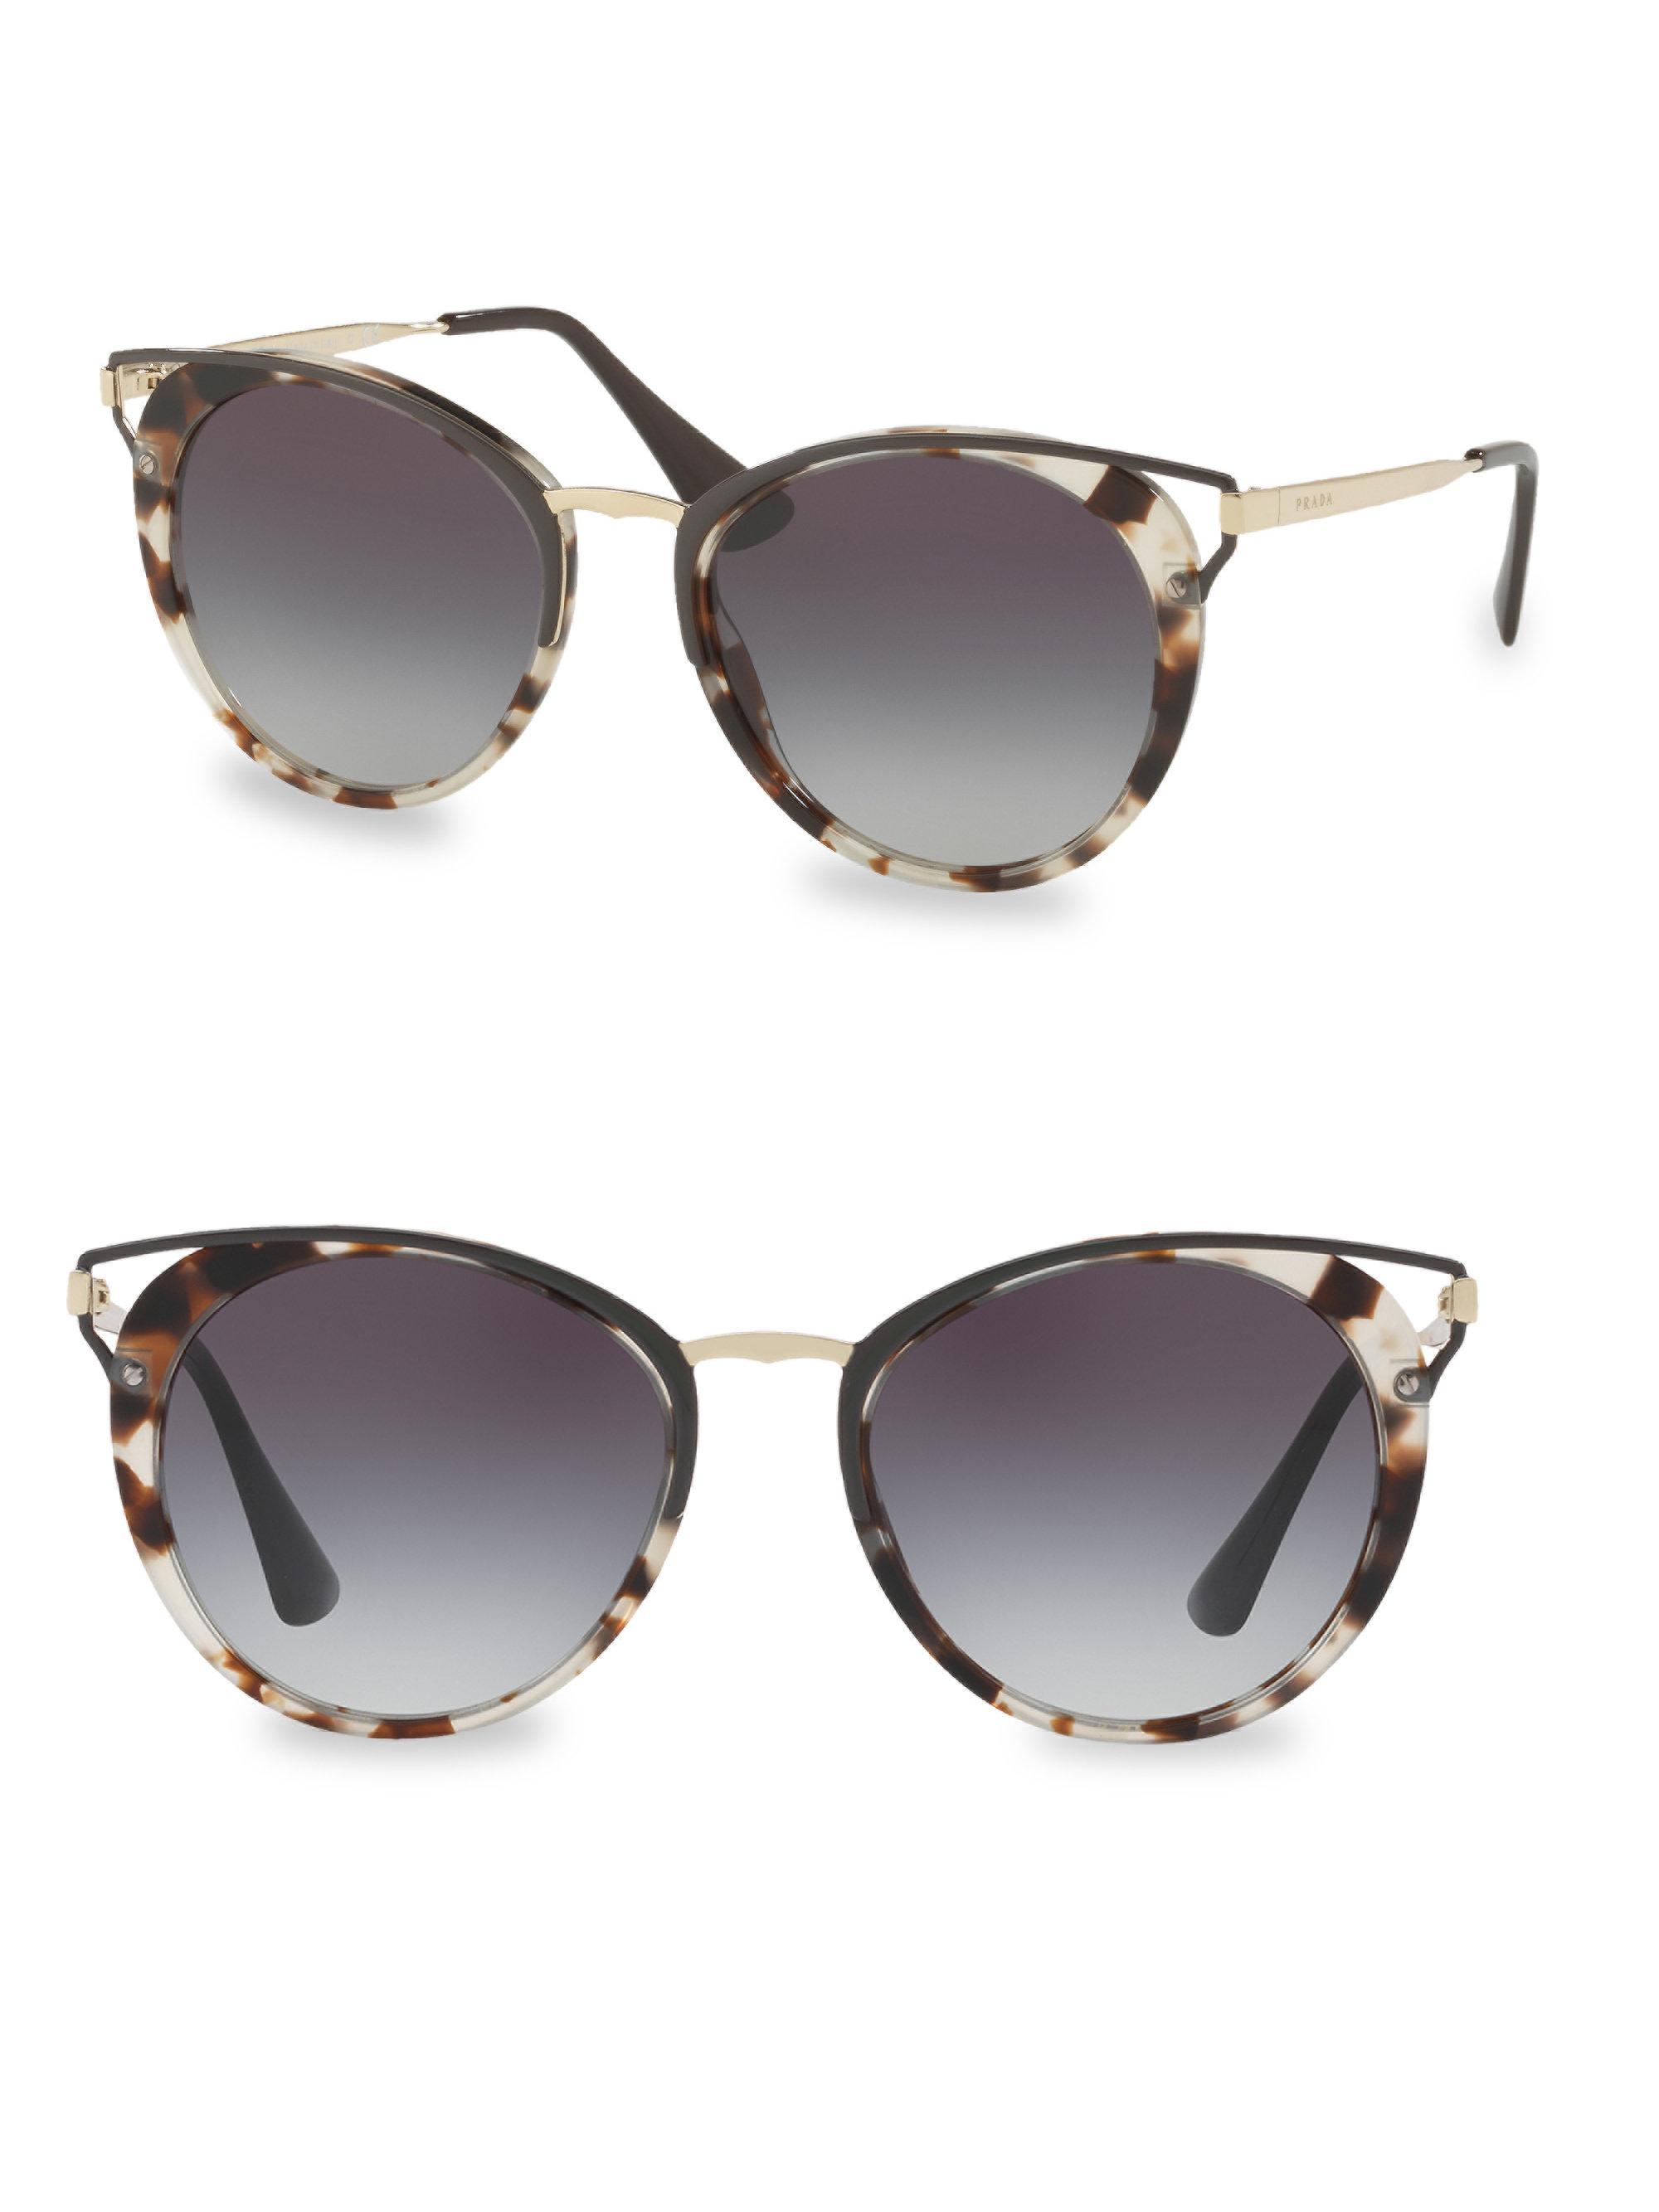 Lyst - Prada 54mm Cutout Cat Eye Sunglasses in Brown